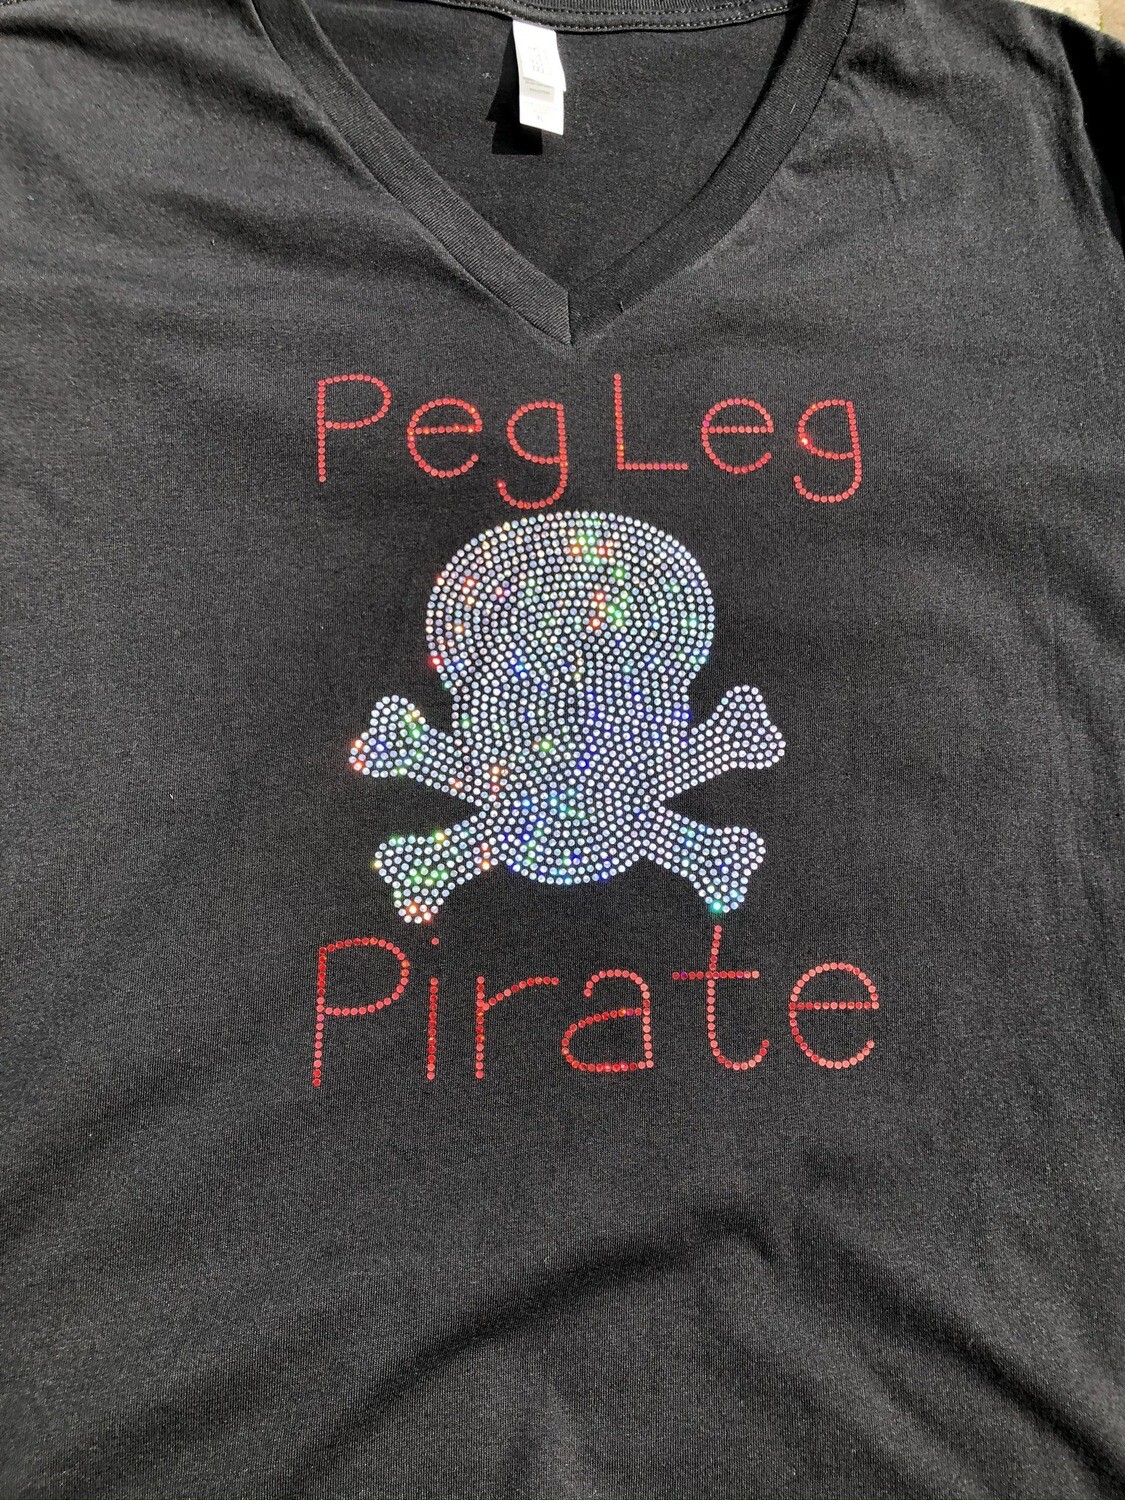 Spangle PegLeg Shirt